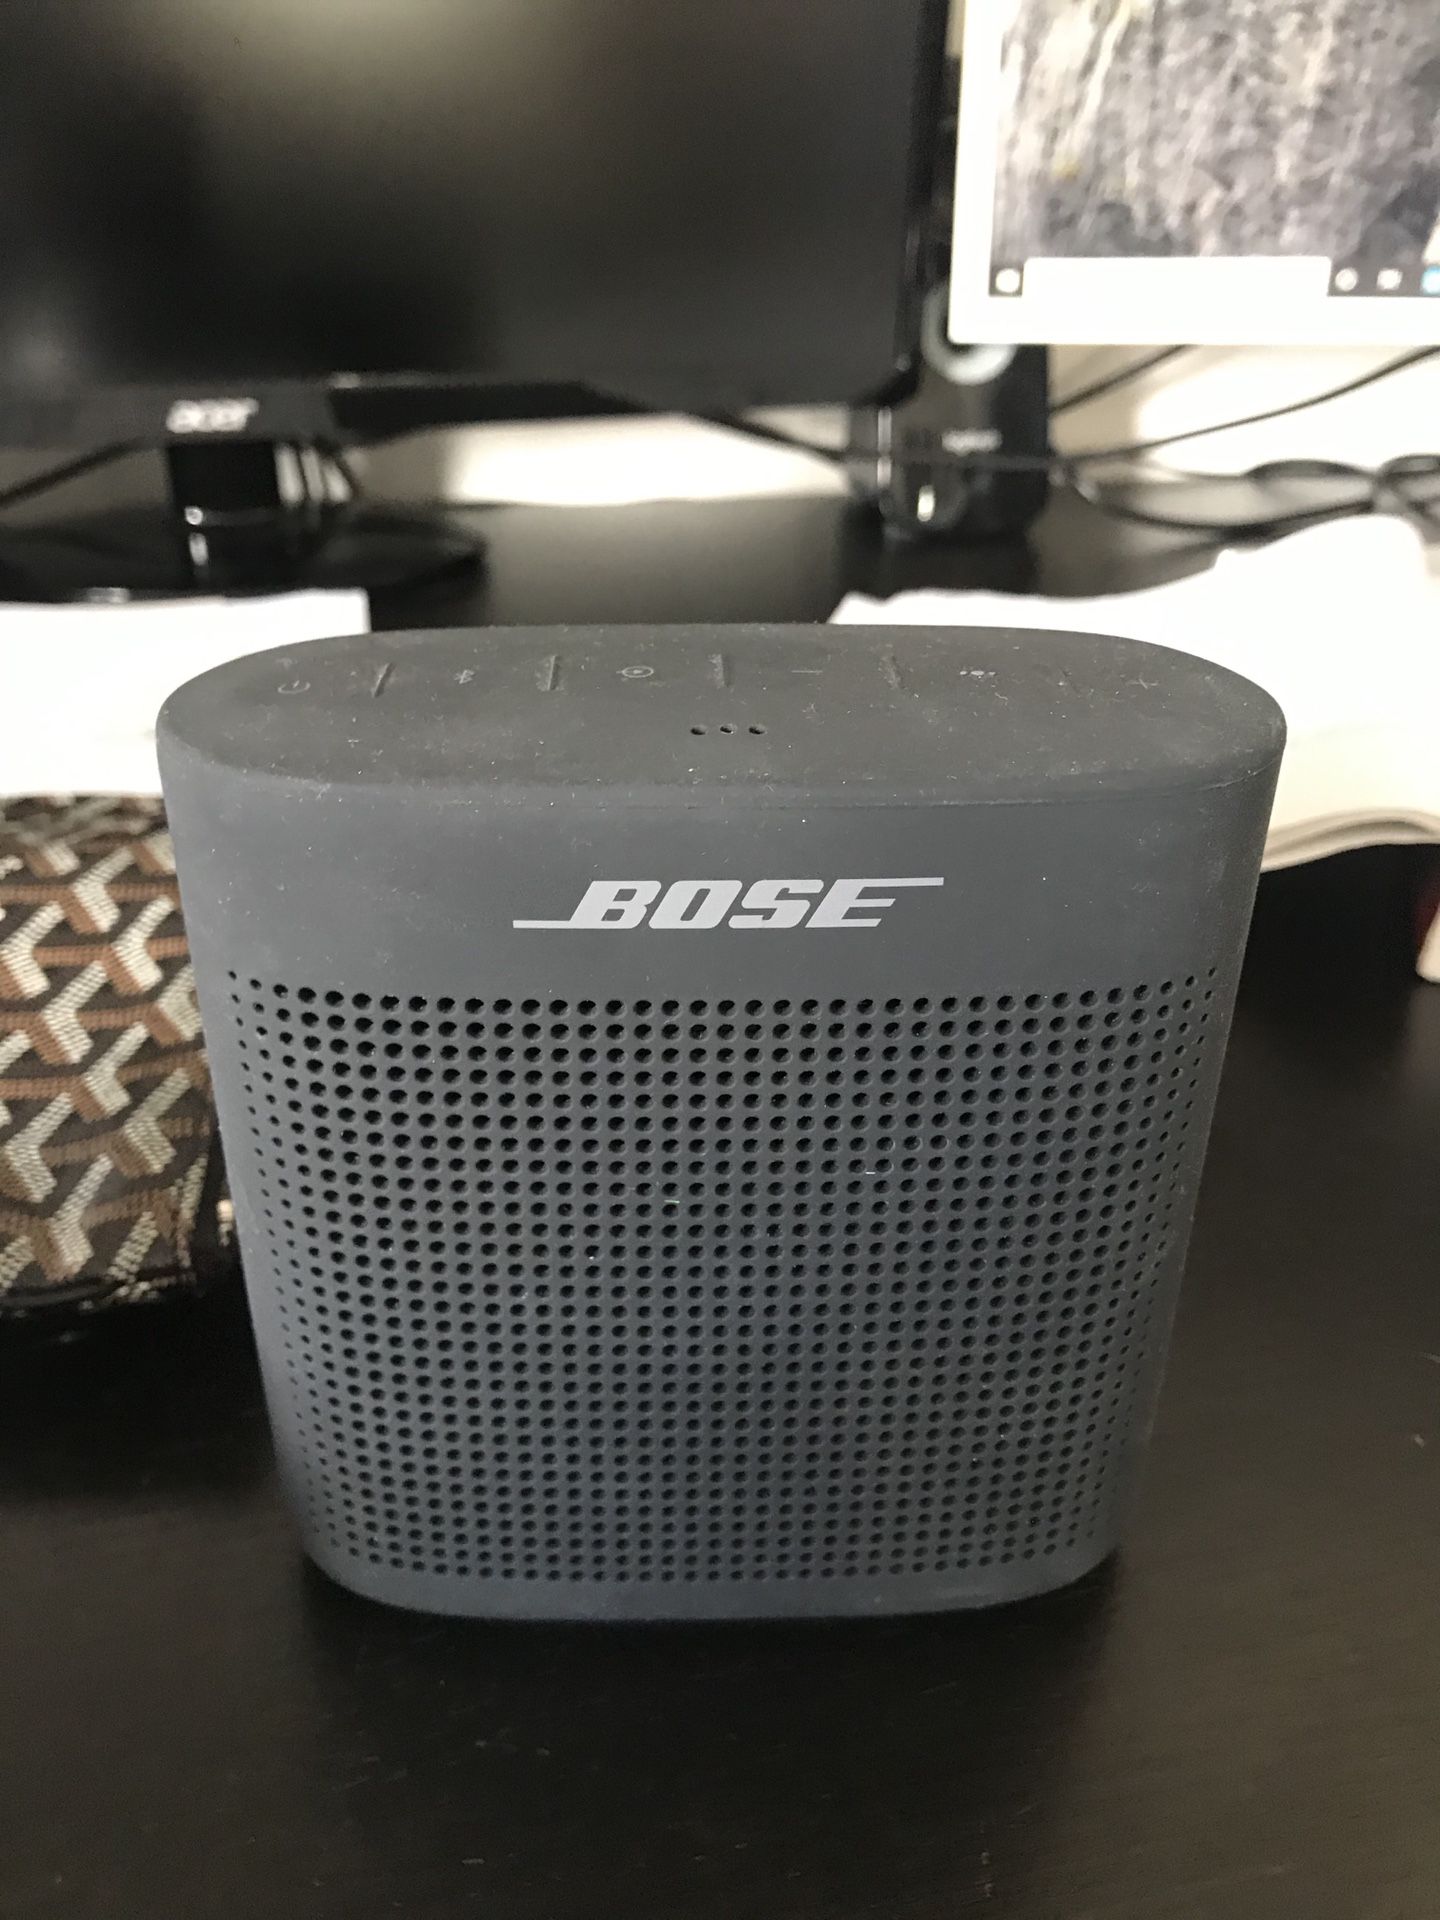 Bose soundlink II Like new portable Bluetooth speaker